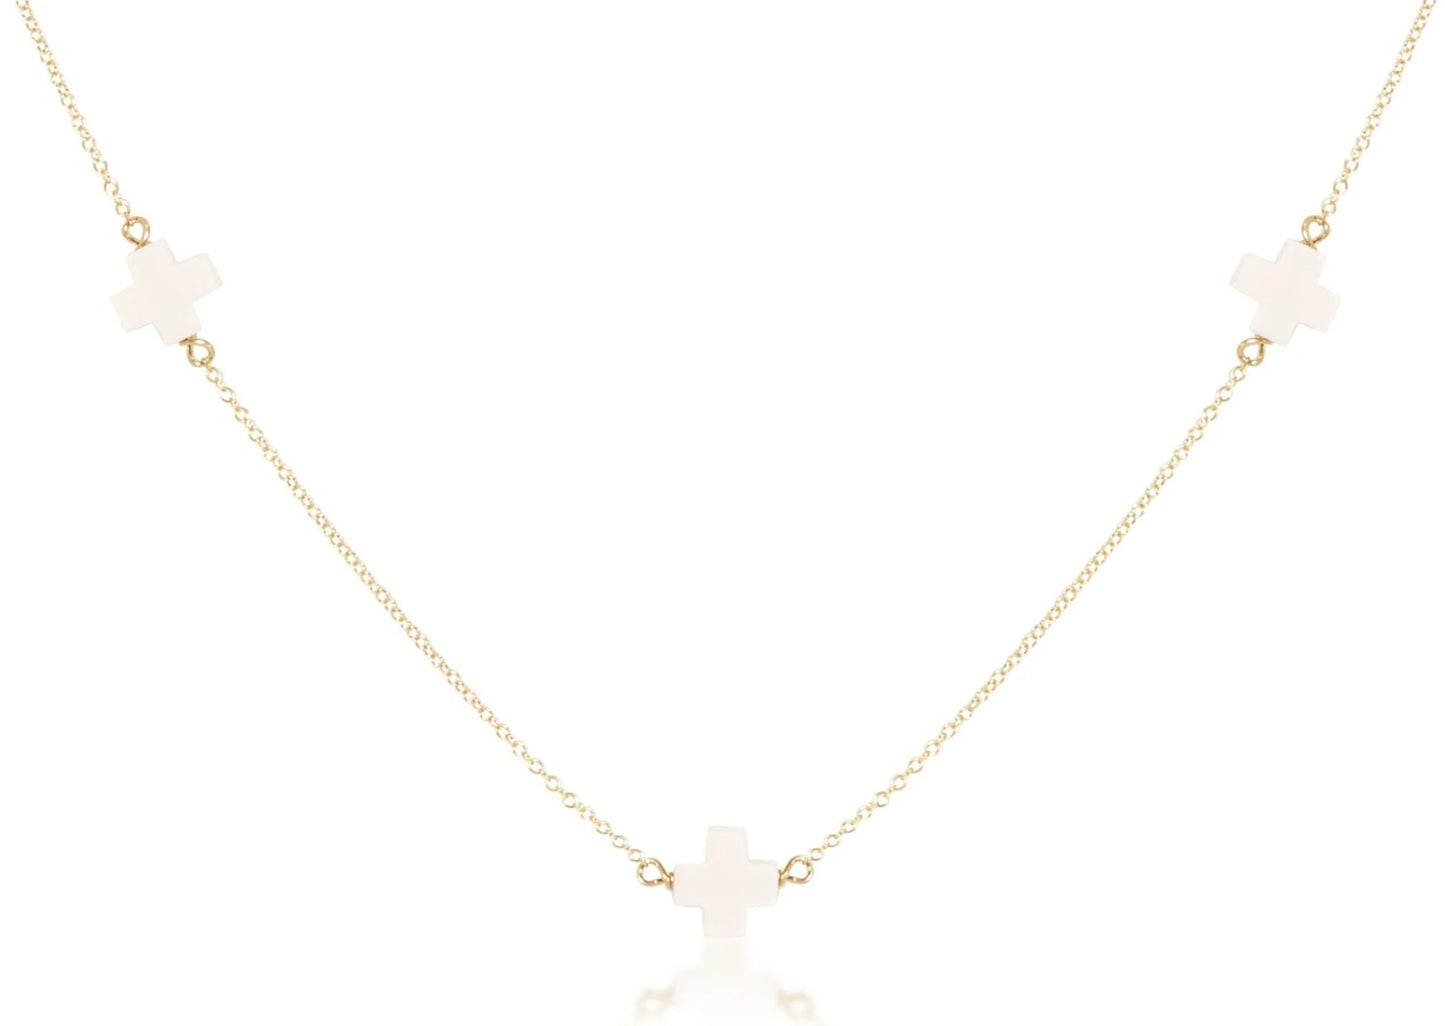 17" Choker Simplicity Chain Gold - Signature Cross Off White